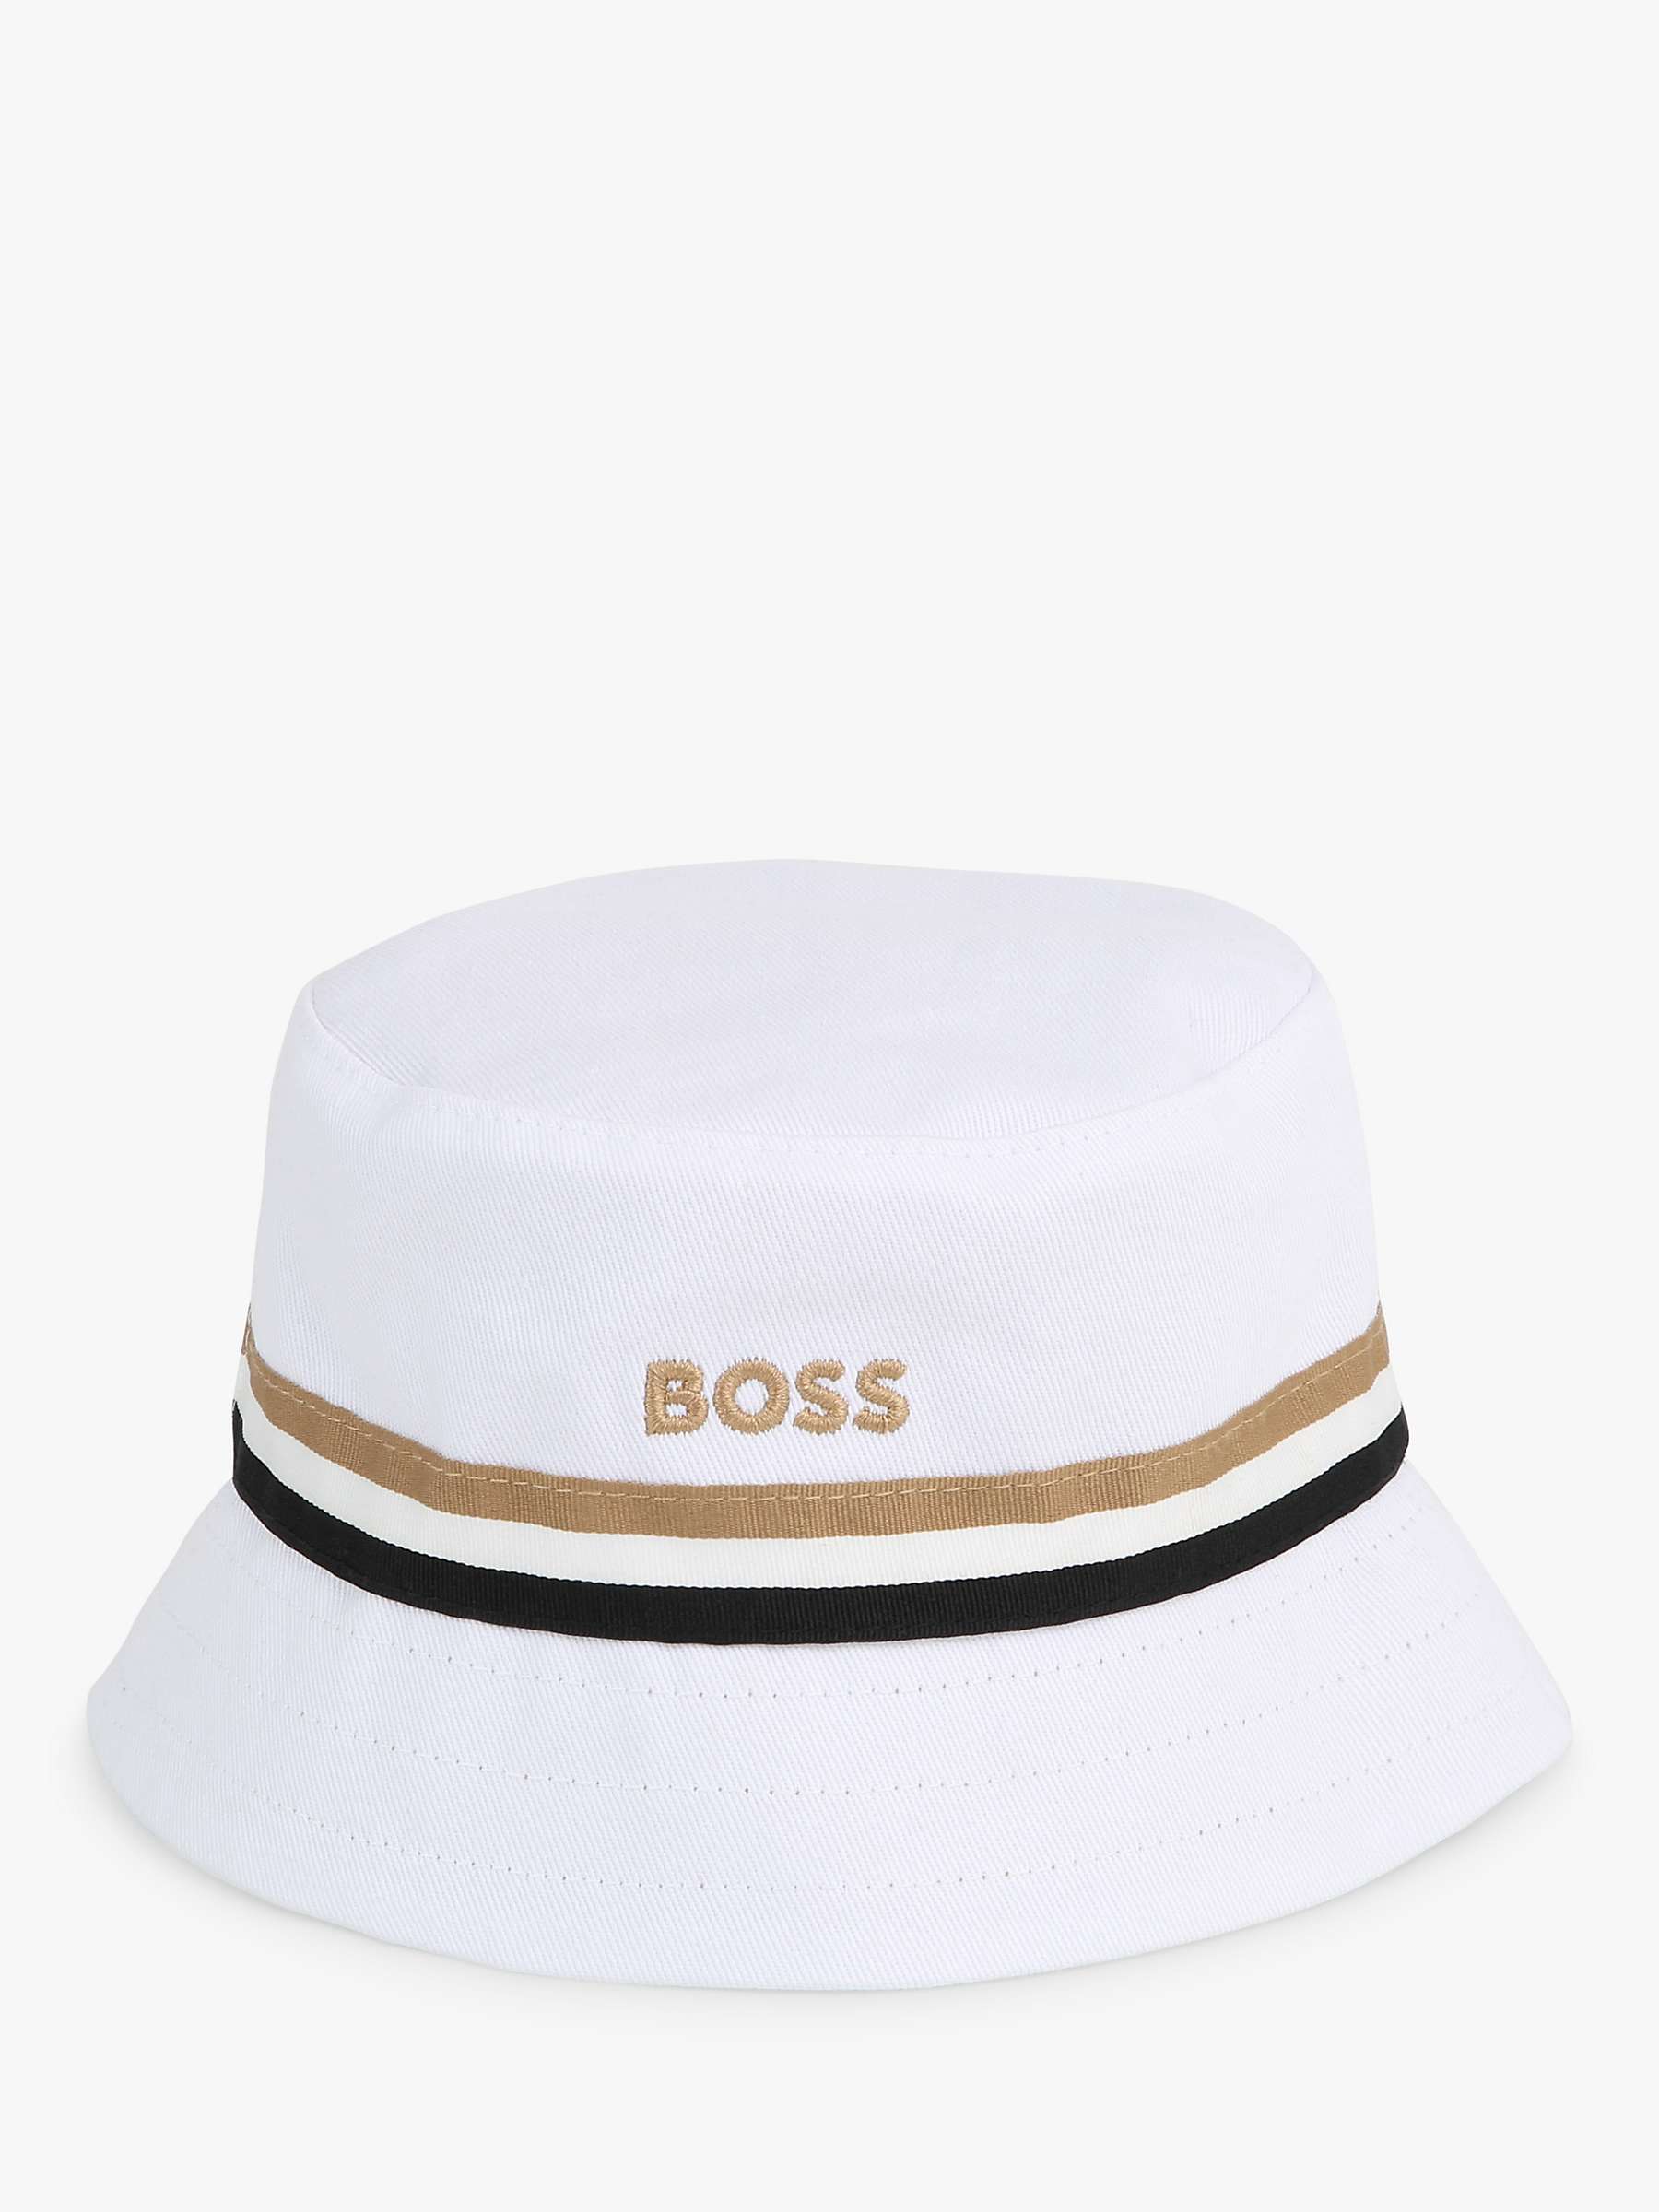 Buy BOSS Baby Reversible Bucket Hat, White/Brown Online at johnlewis.com